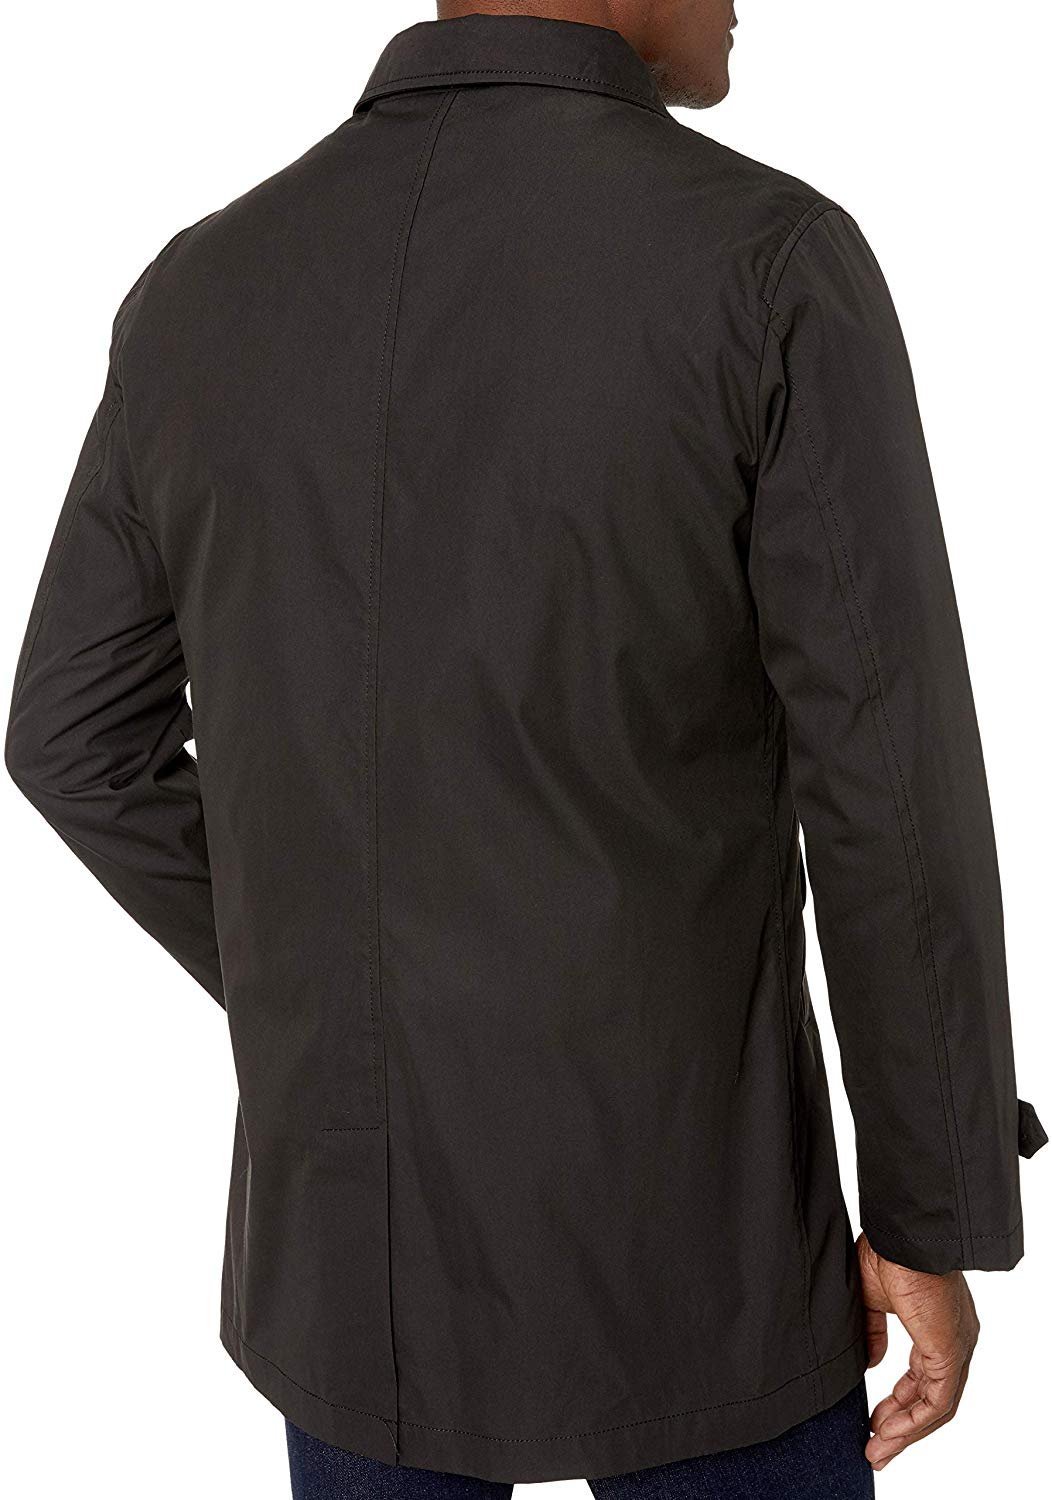 Adam Baker Men's Single-Breasted Classic Fit Water Repellent Lightweight Raincoat